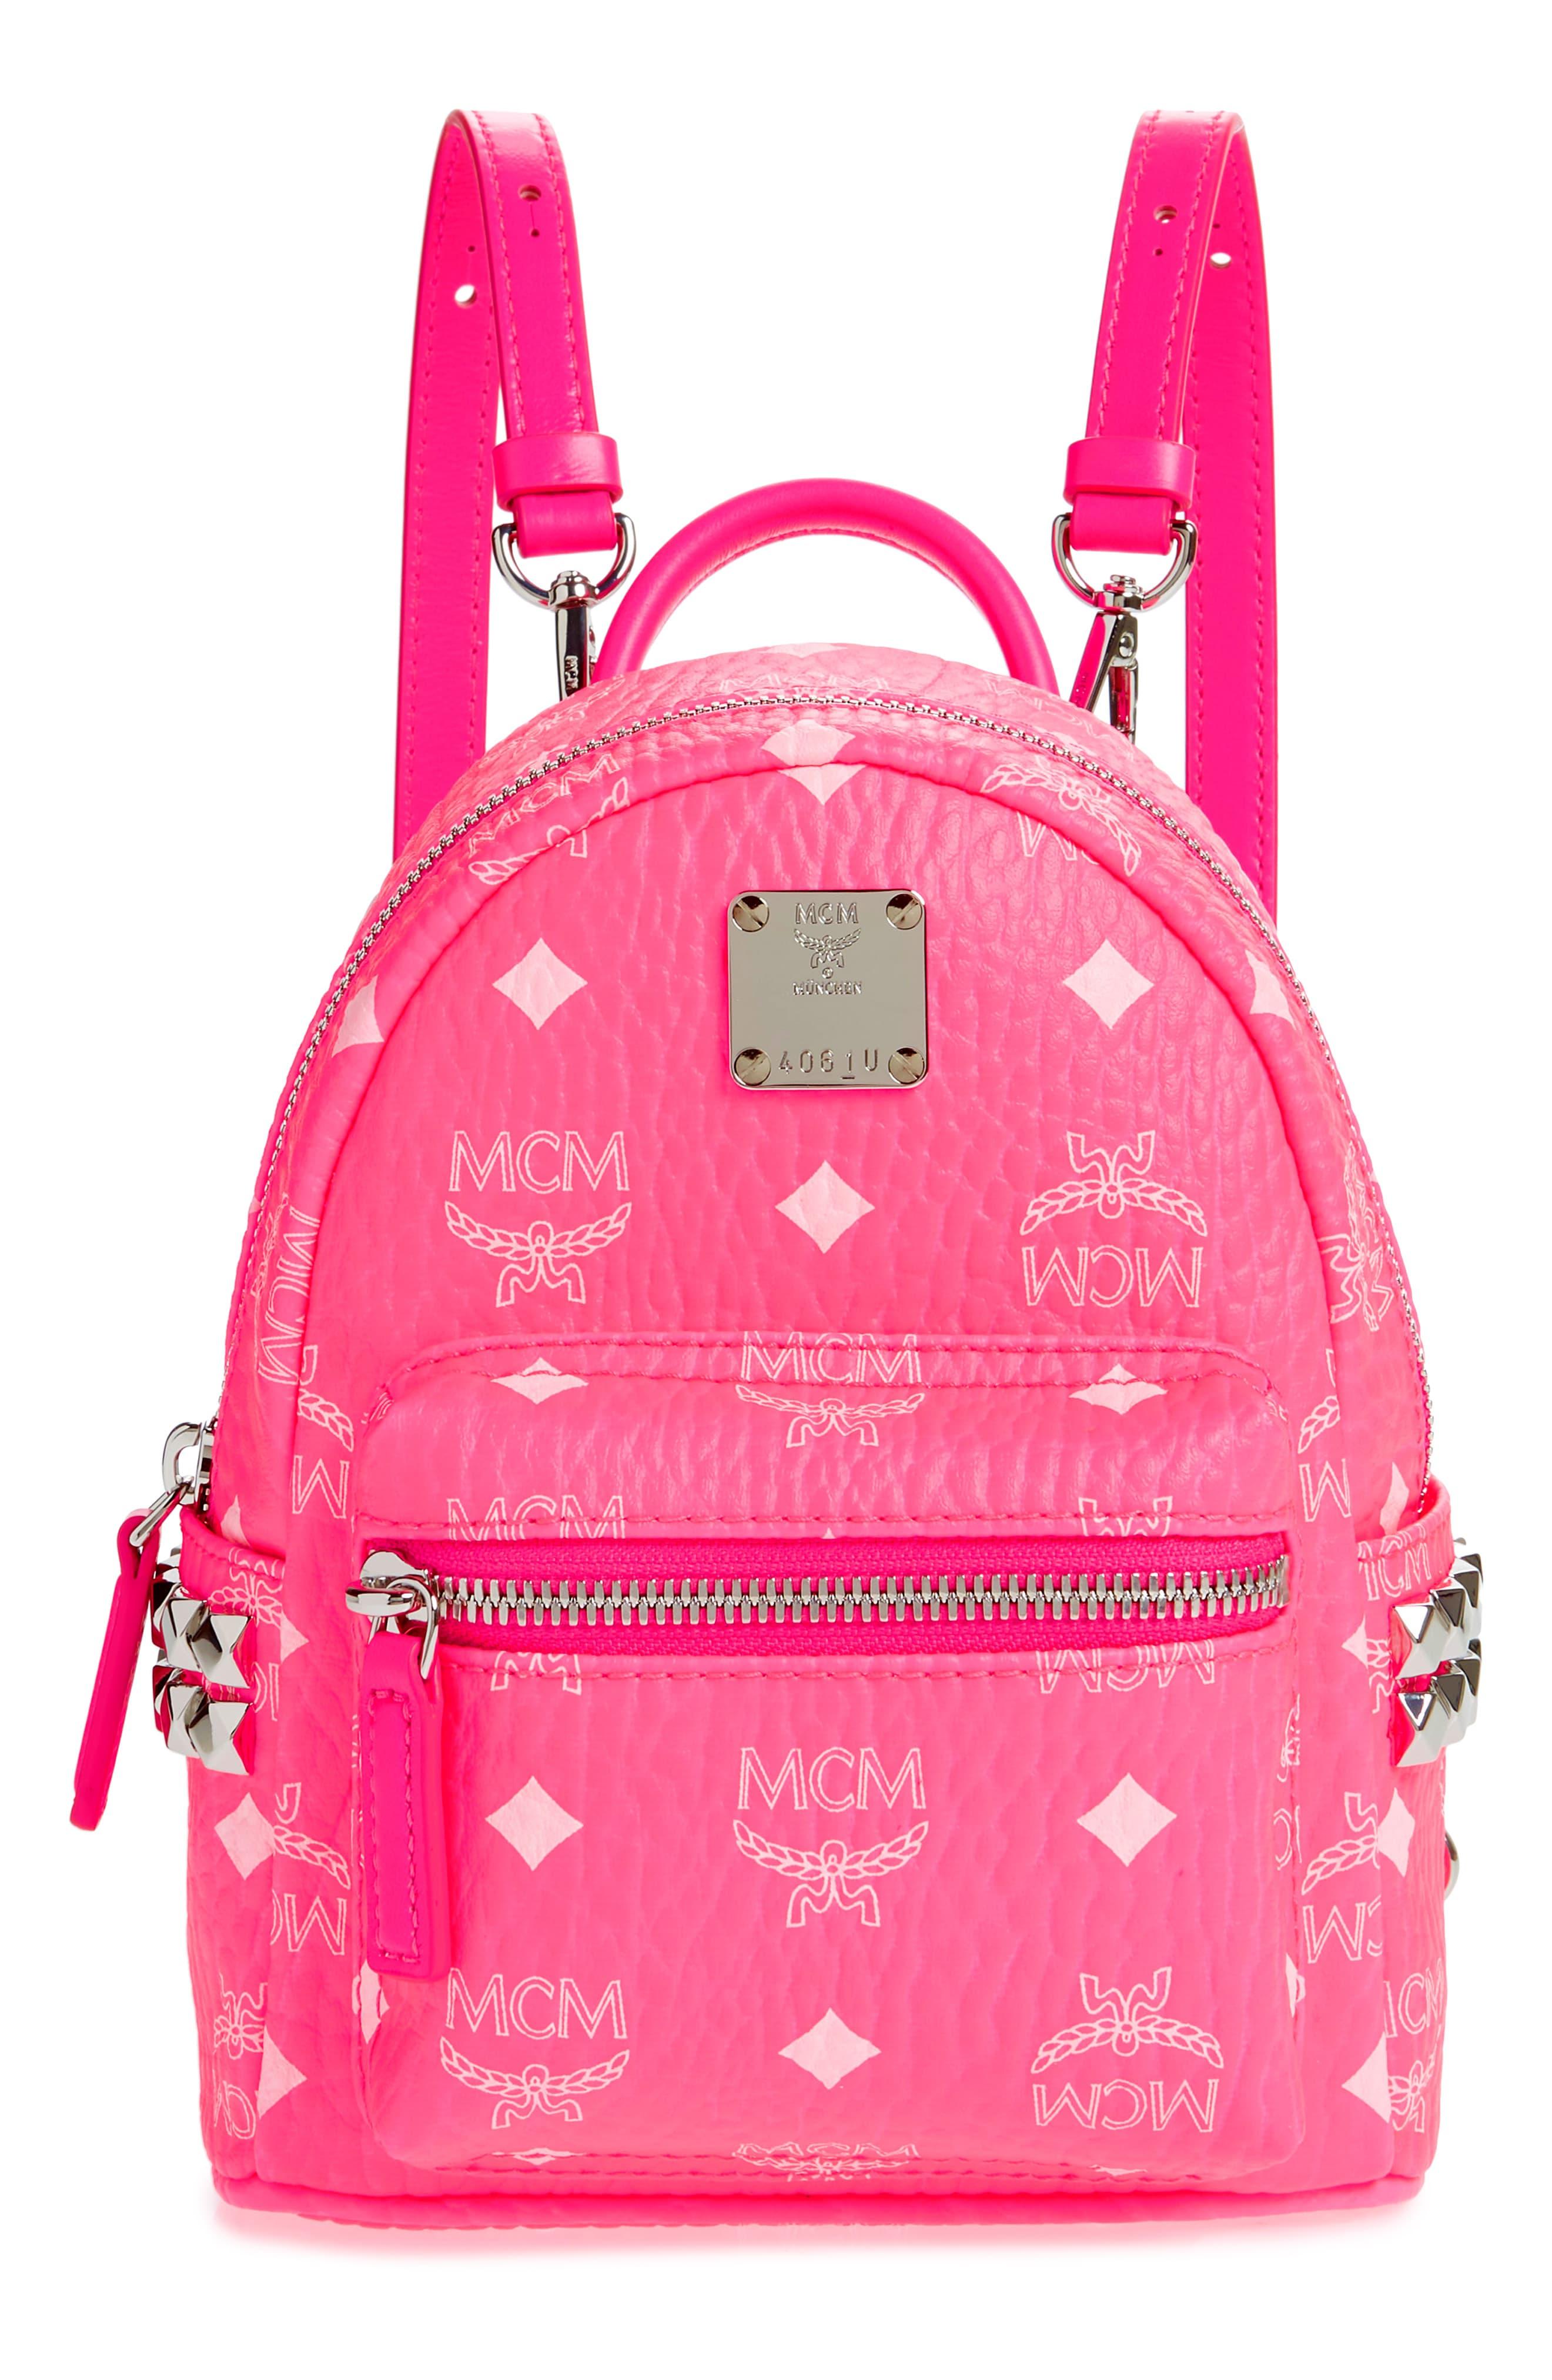 MCM Stark 20 Visetos Neon Coated Canvas Backpack in Neon Pink (Pink) - Lyst